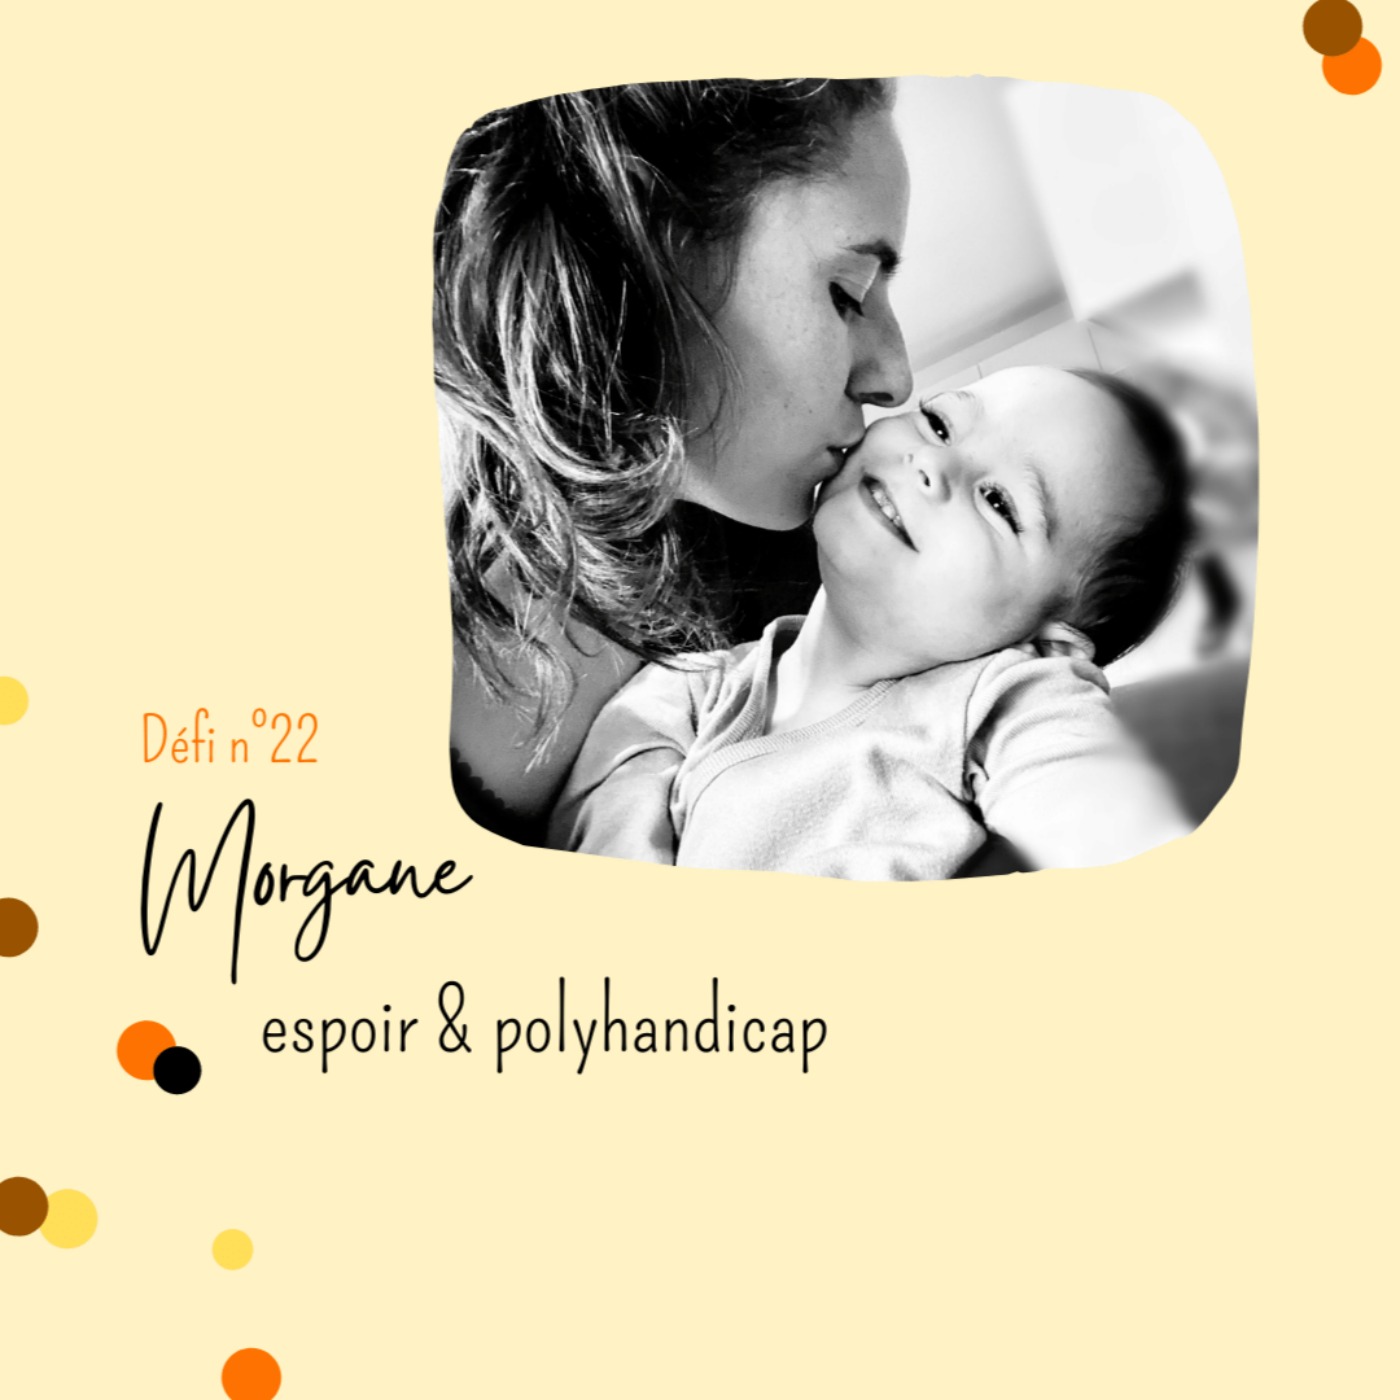 Défi n°22 : Morgane, espoir & polyhandicap